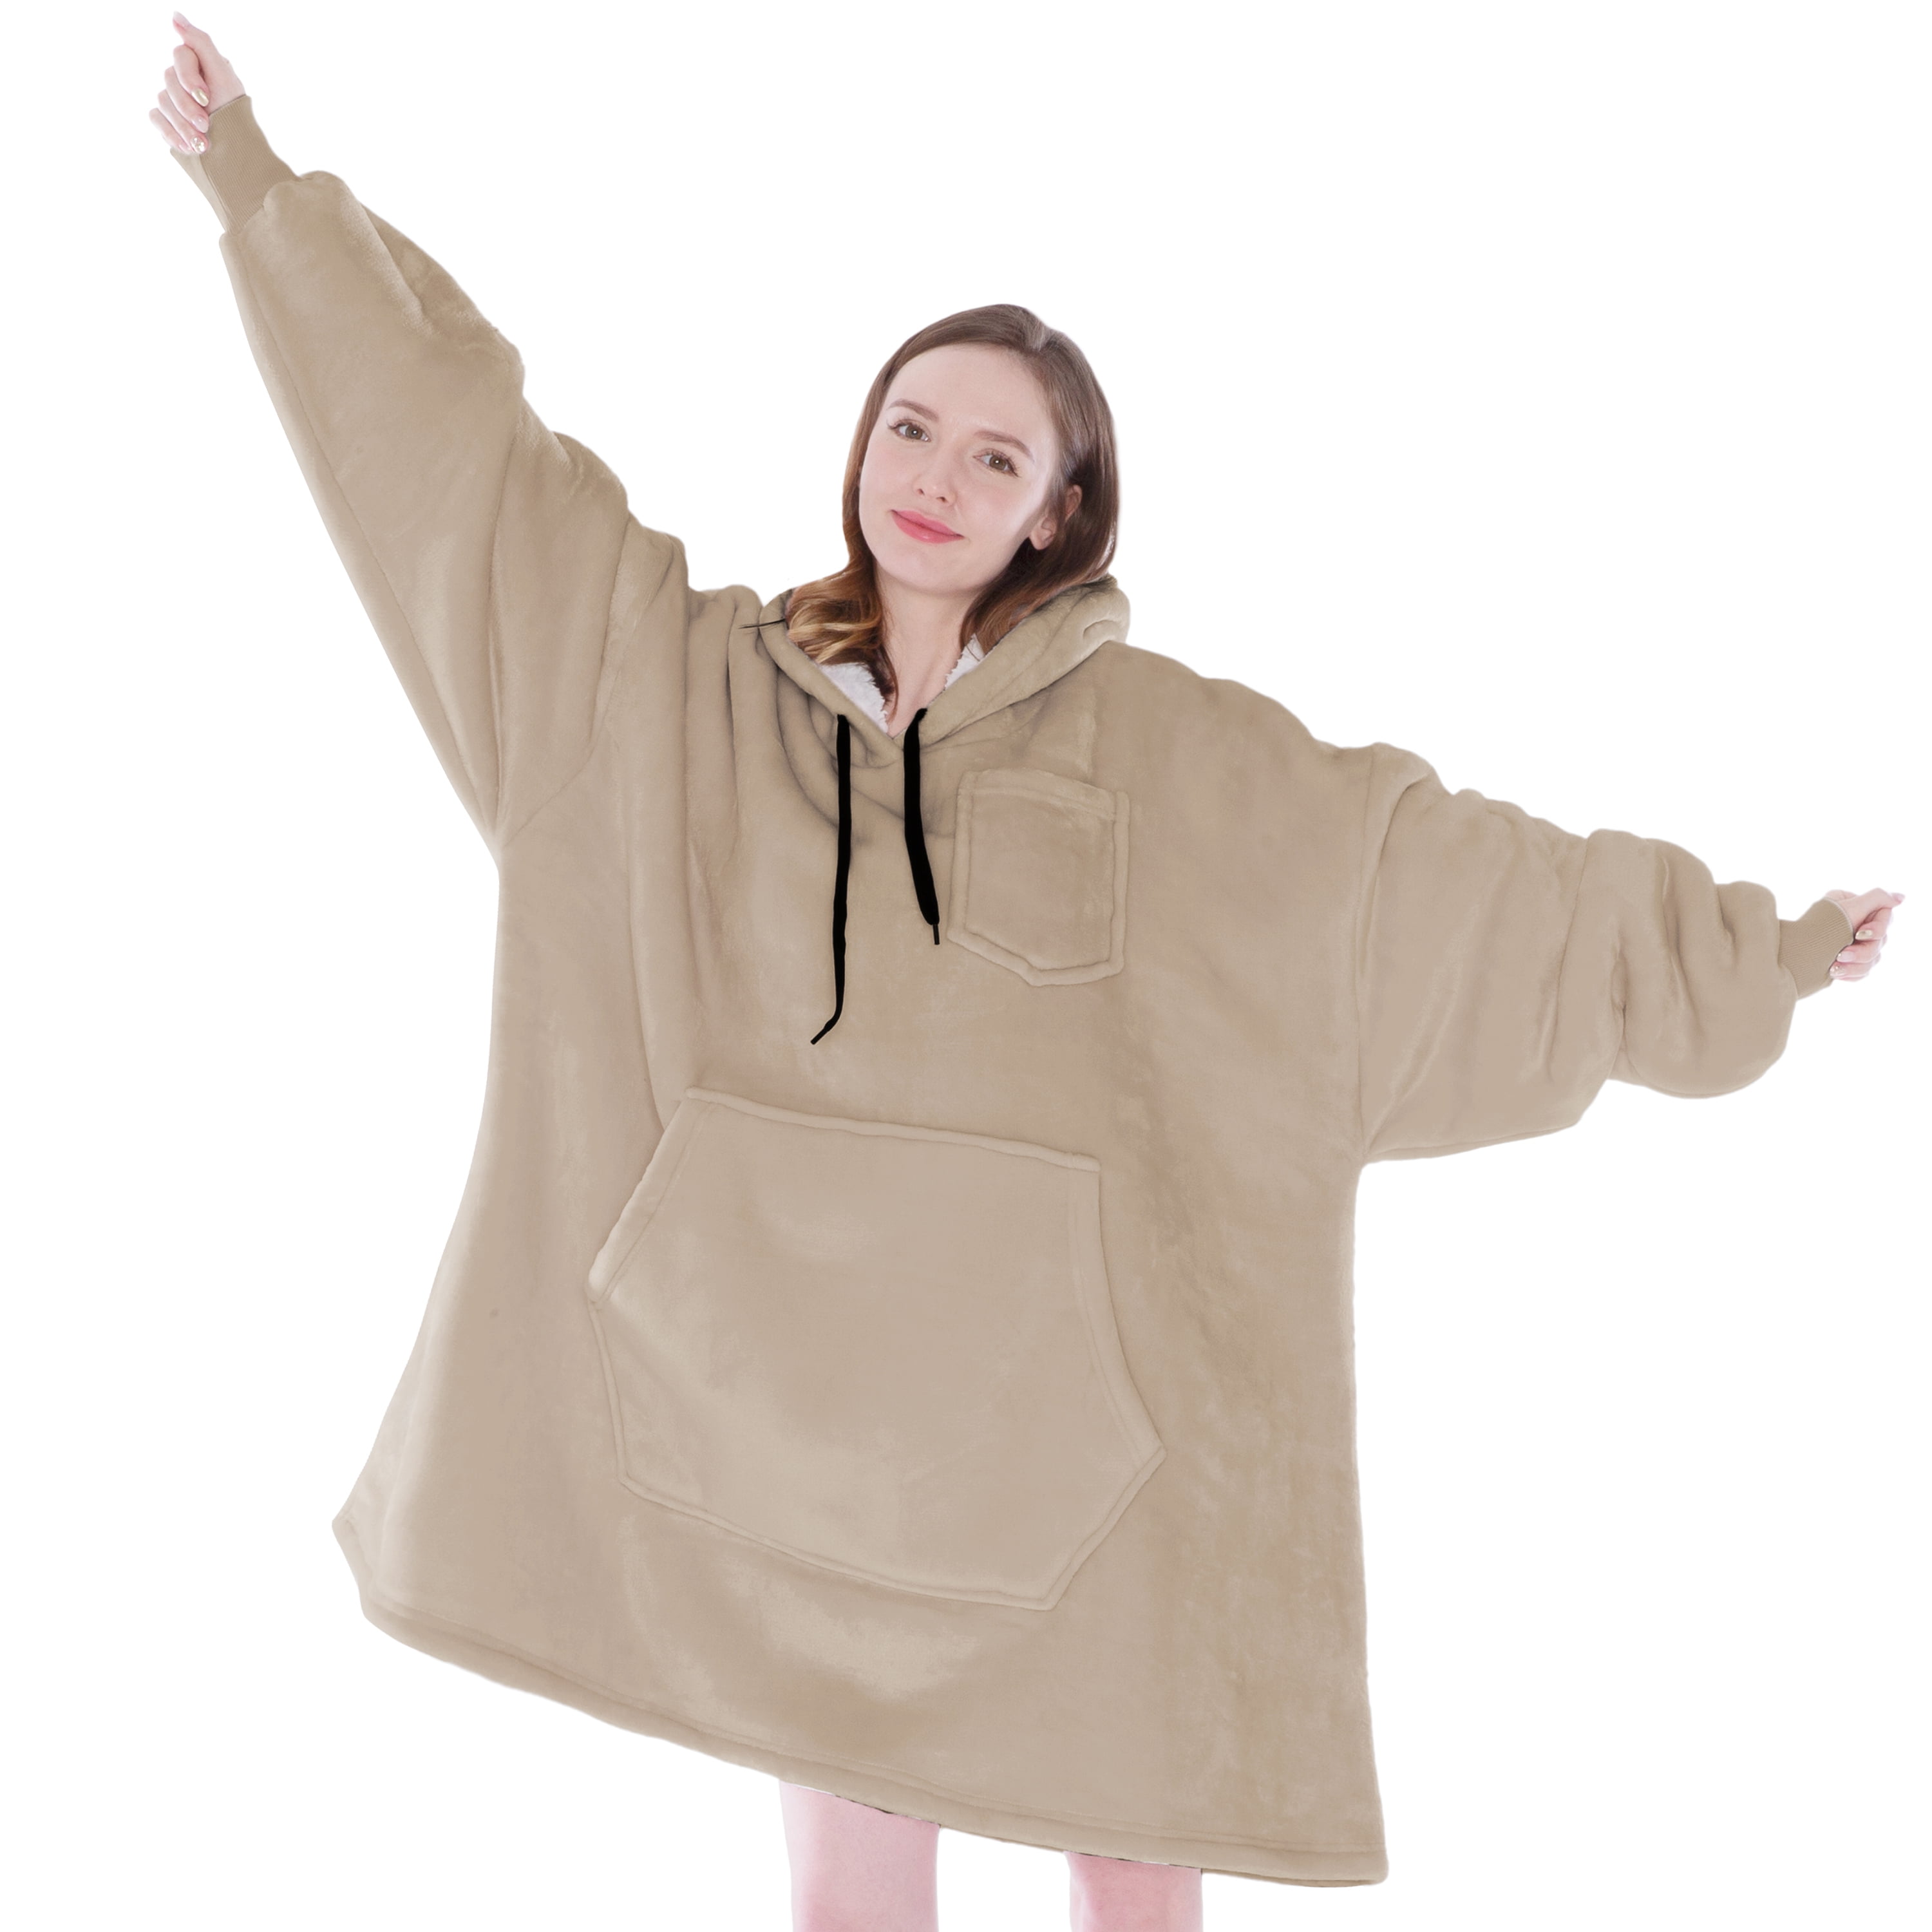 PAVILIA Blanket Hoodie for Women Tan, Sherpa Wearable Blanket Men, Cozy  Oversized Sweatshirt Blanket, Warm Fleece Hooded Blanket Sweater with  Sleeves and Giant Pocket, Taupe 